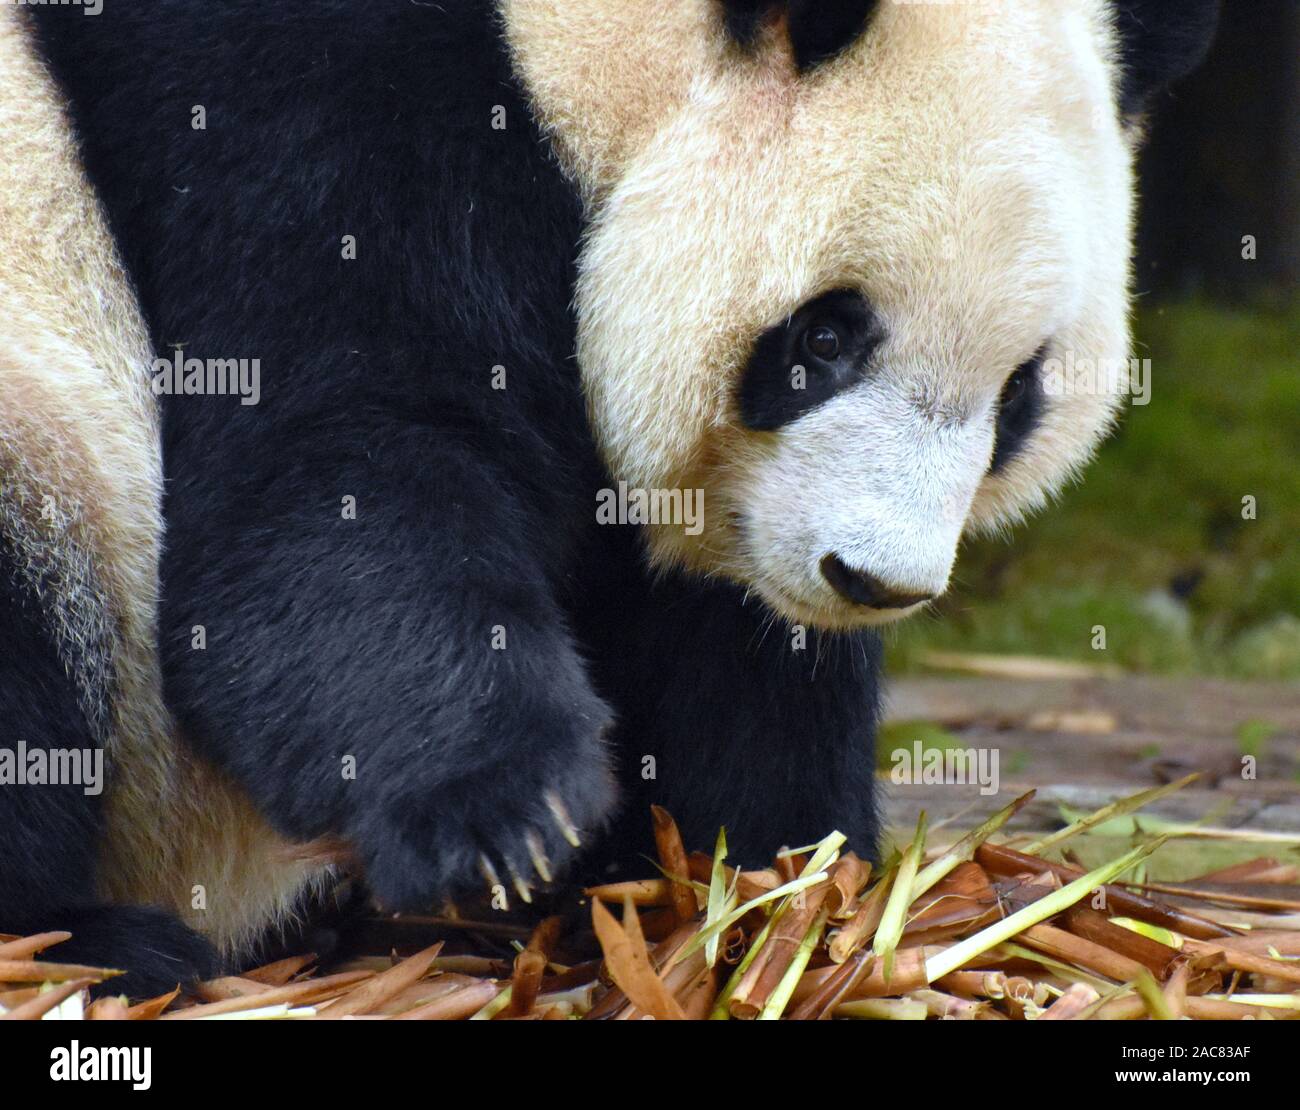 Panda bear close up portrait while picking bamboo shoots Stock Photo